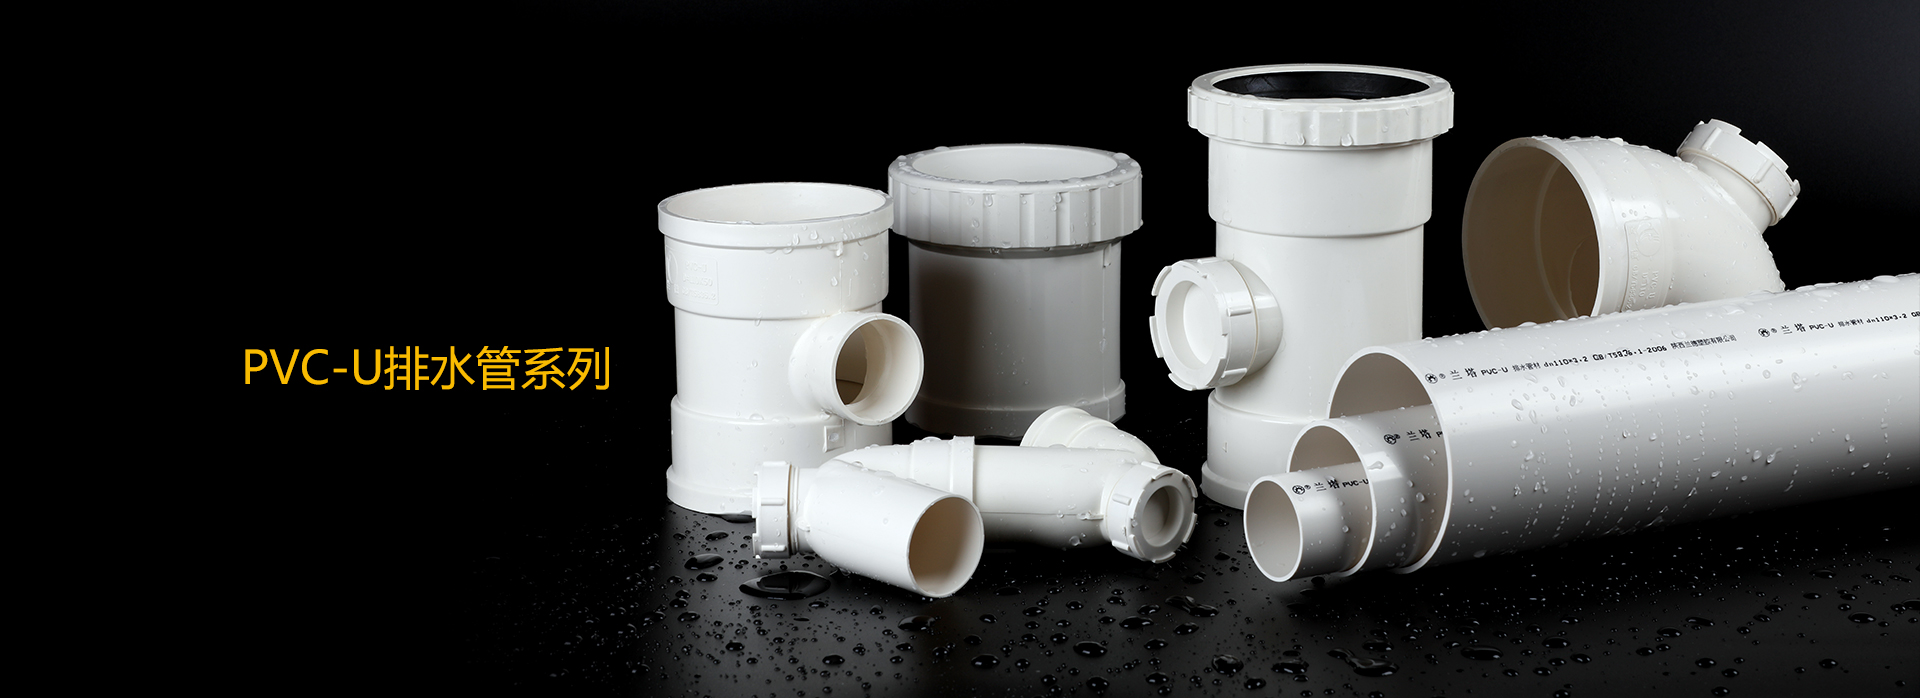 PVC-U排水管系列